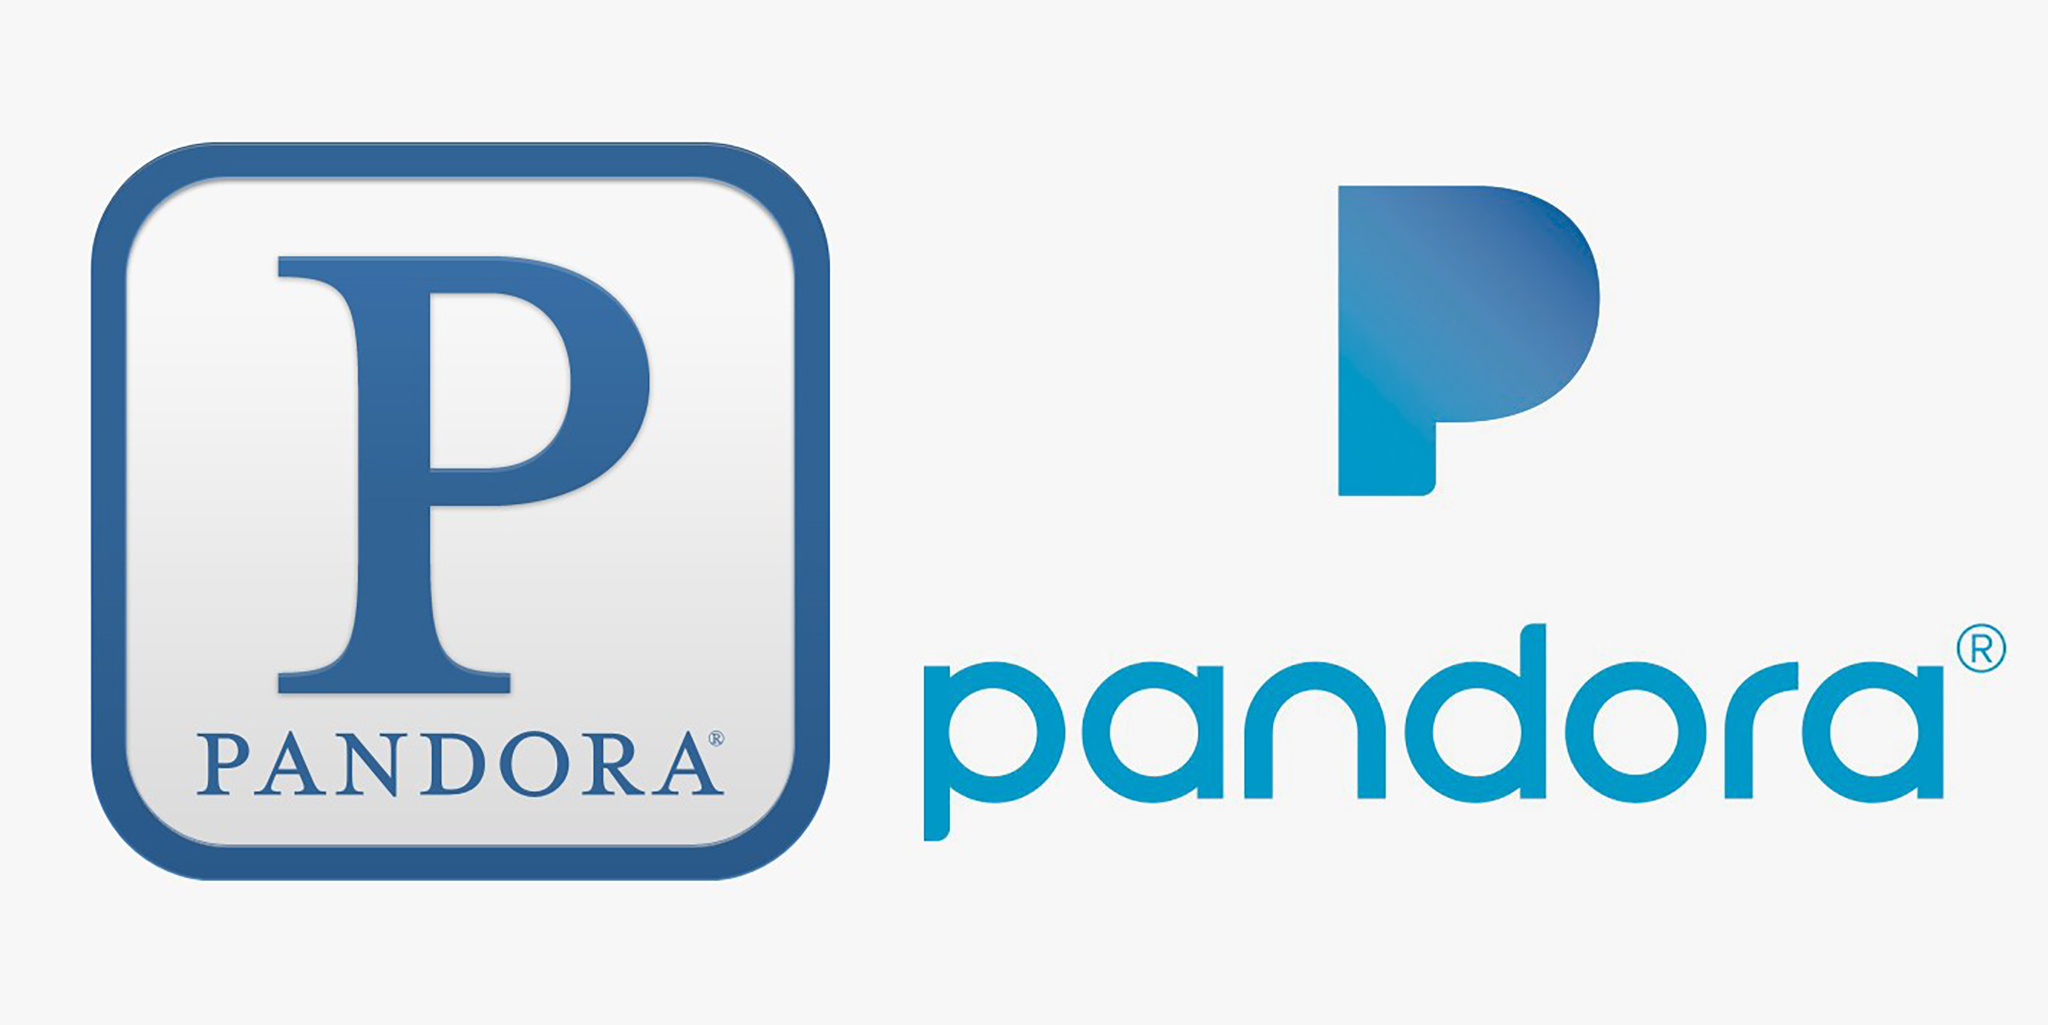 Pandora logo cũ mới.jpg